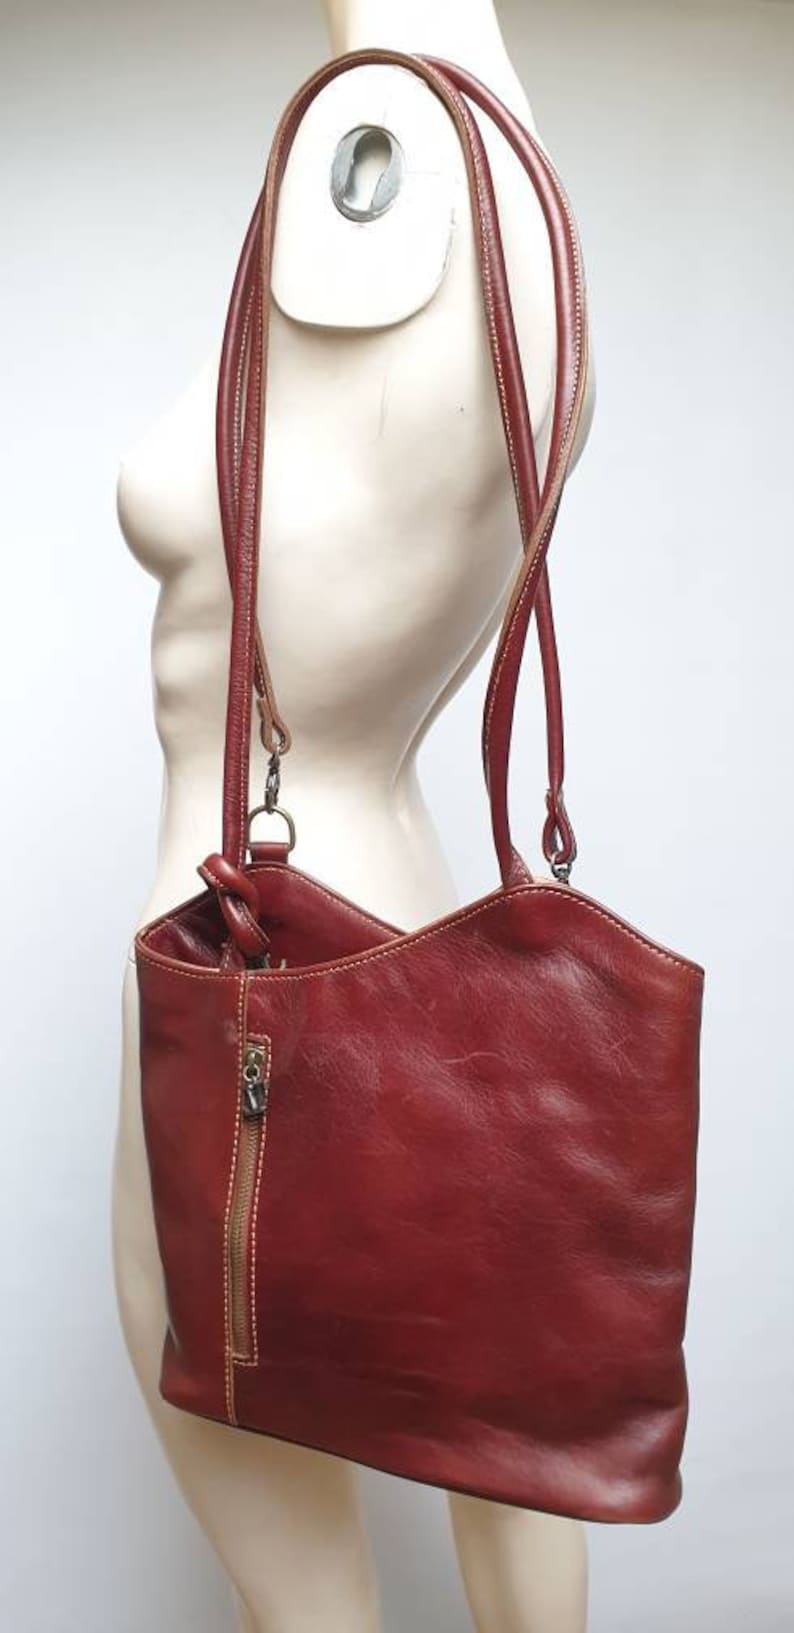 Tuscany Leathr artiganal leather bag backpack adjustable stripes urban look luxury bag striped textile lining burgundy leather preloved bag image 5